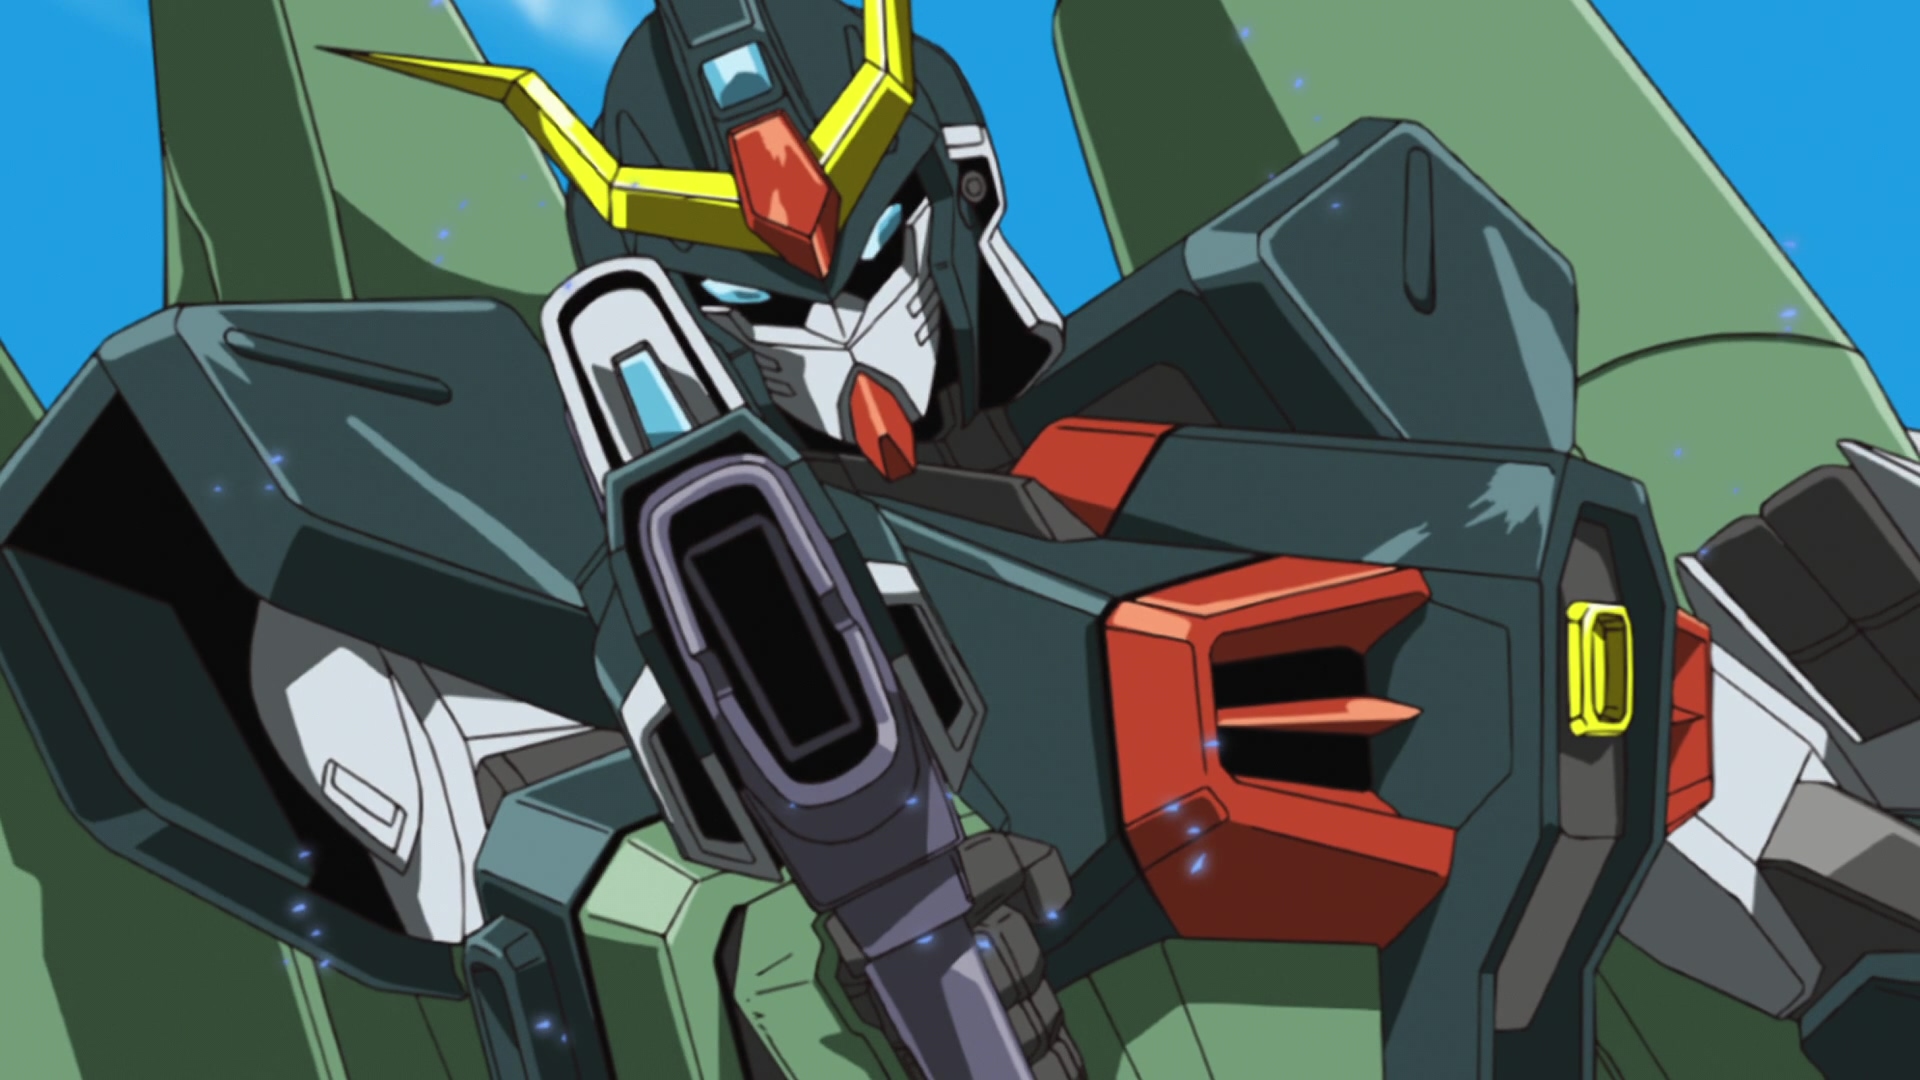 Anime 1920x1080 Gundam Mobile Suit Gundam SEED Destiny Mobile Suit anime at gunpoint gun